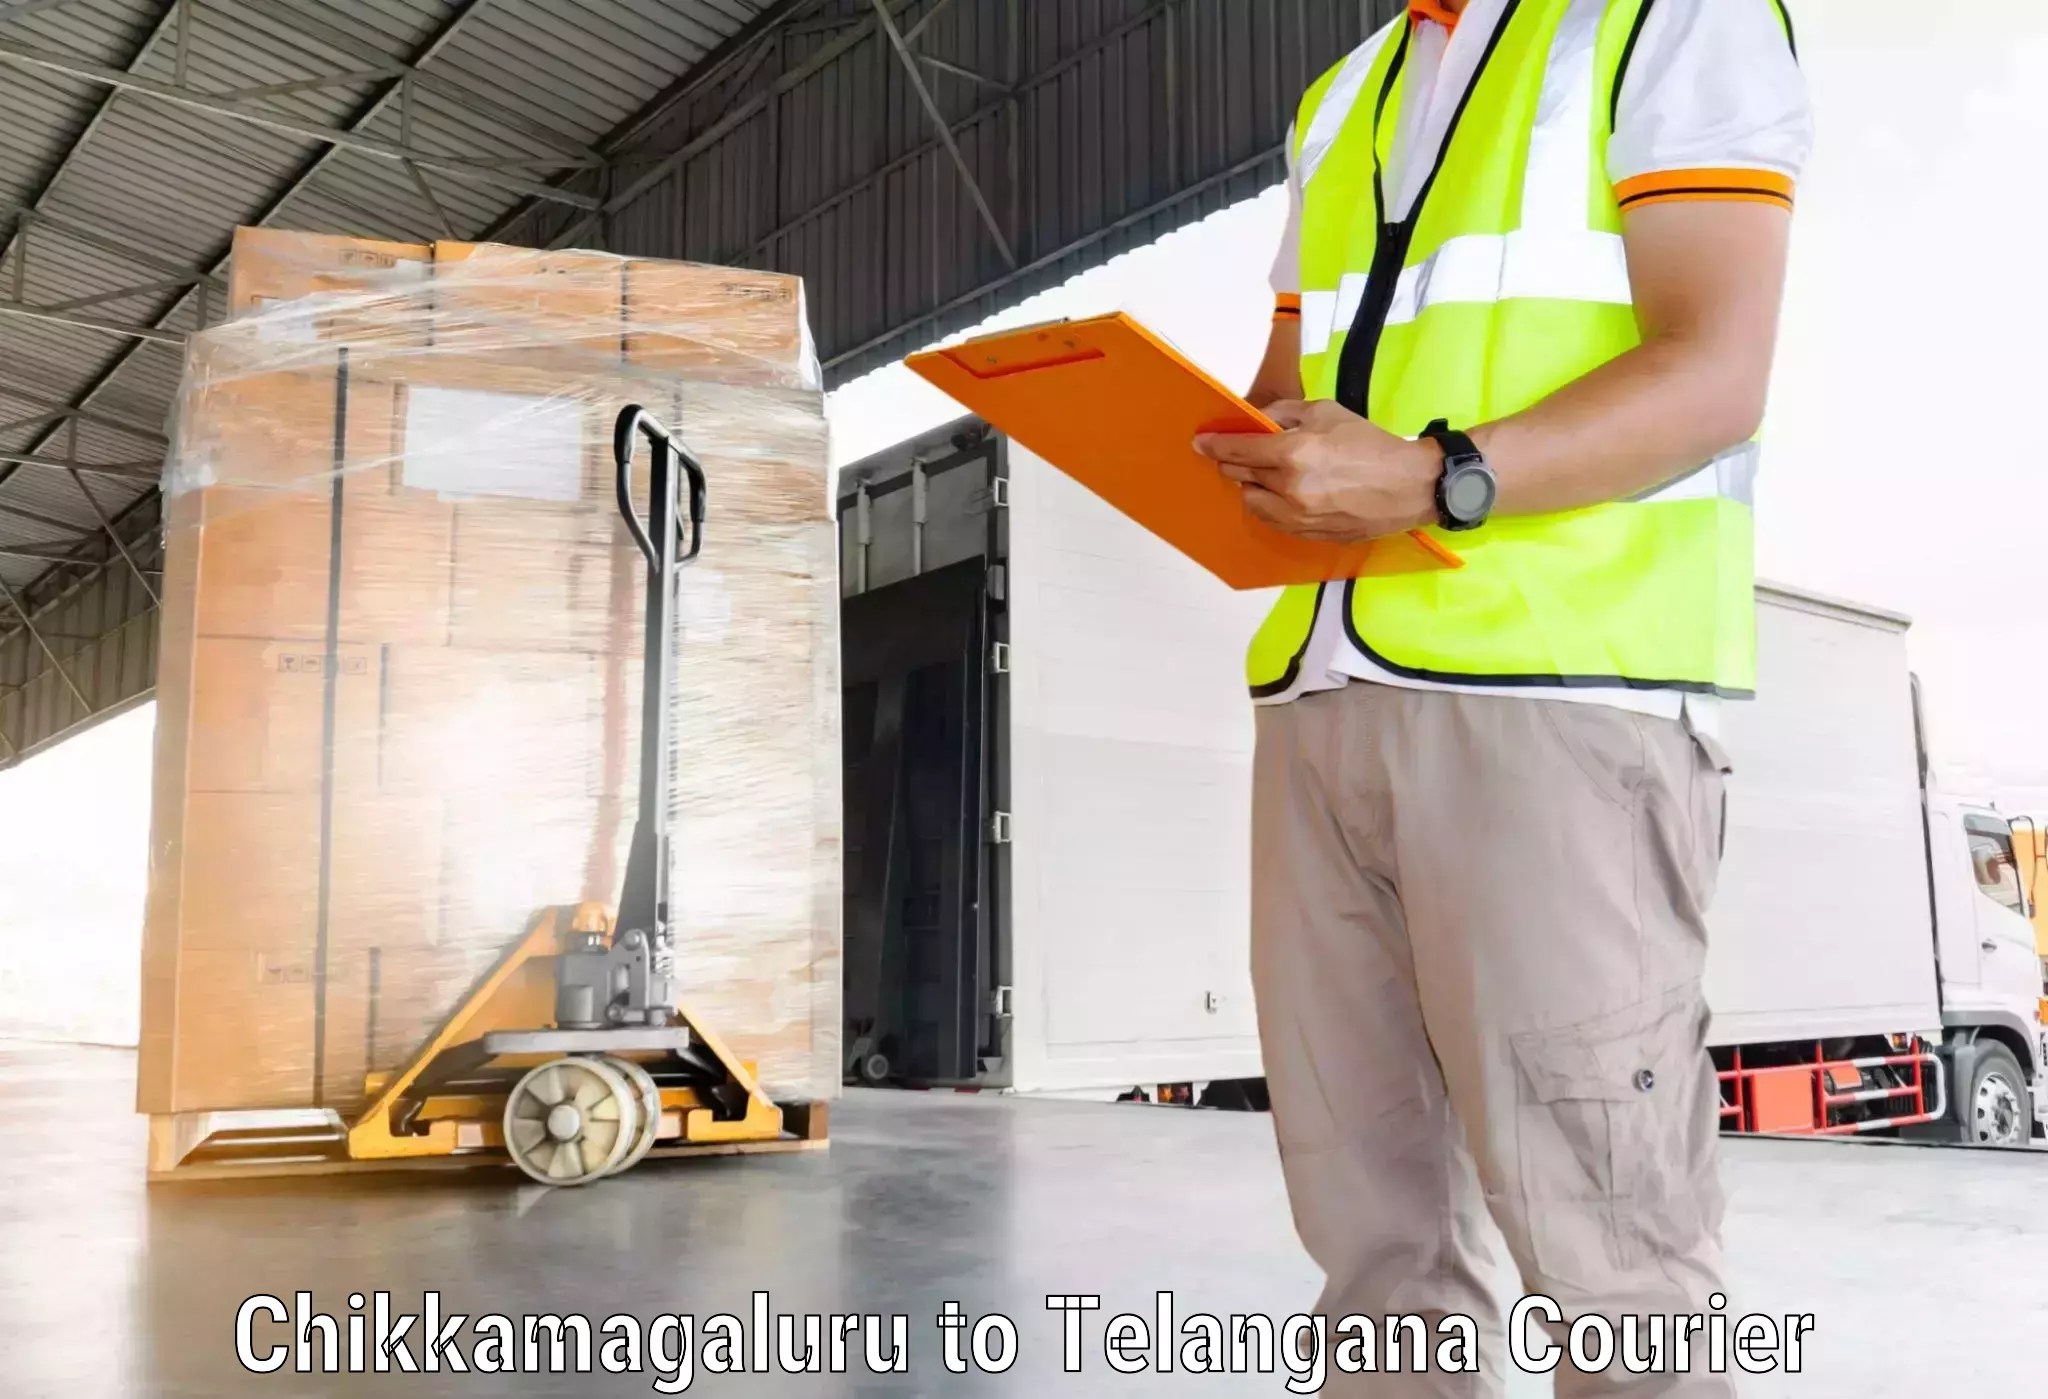 State-of-the-art courier technology Chikkamagaluru to Manthani